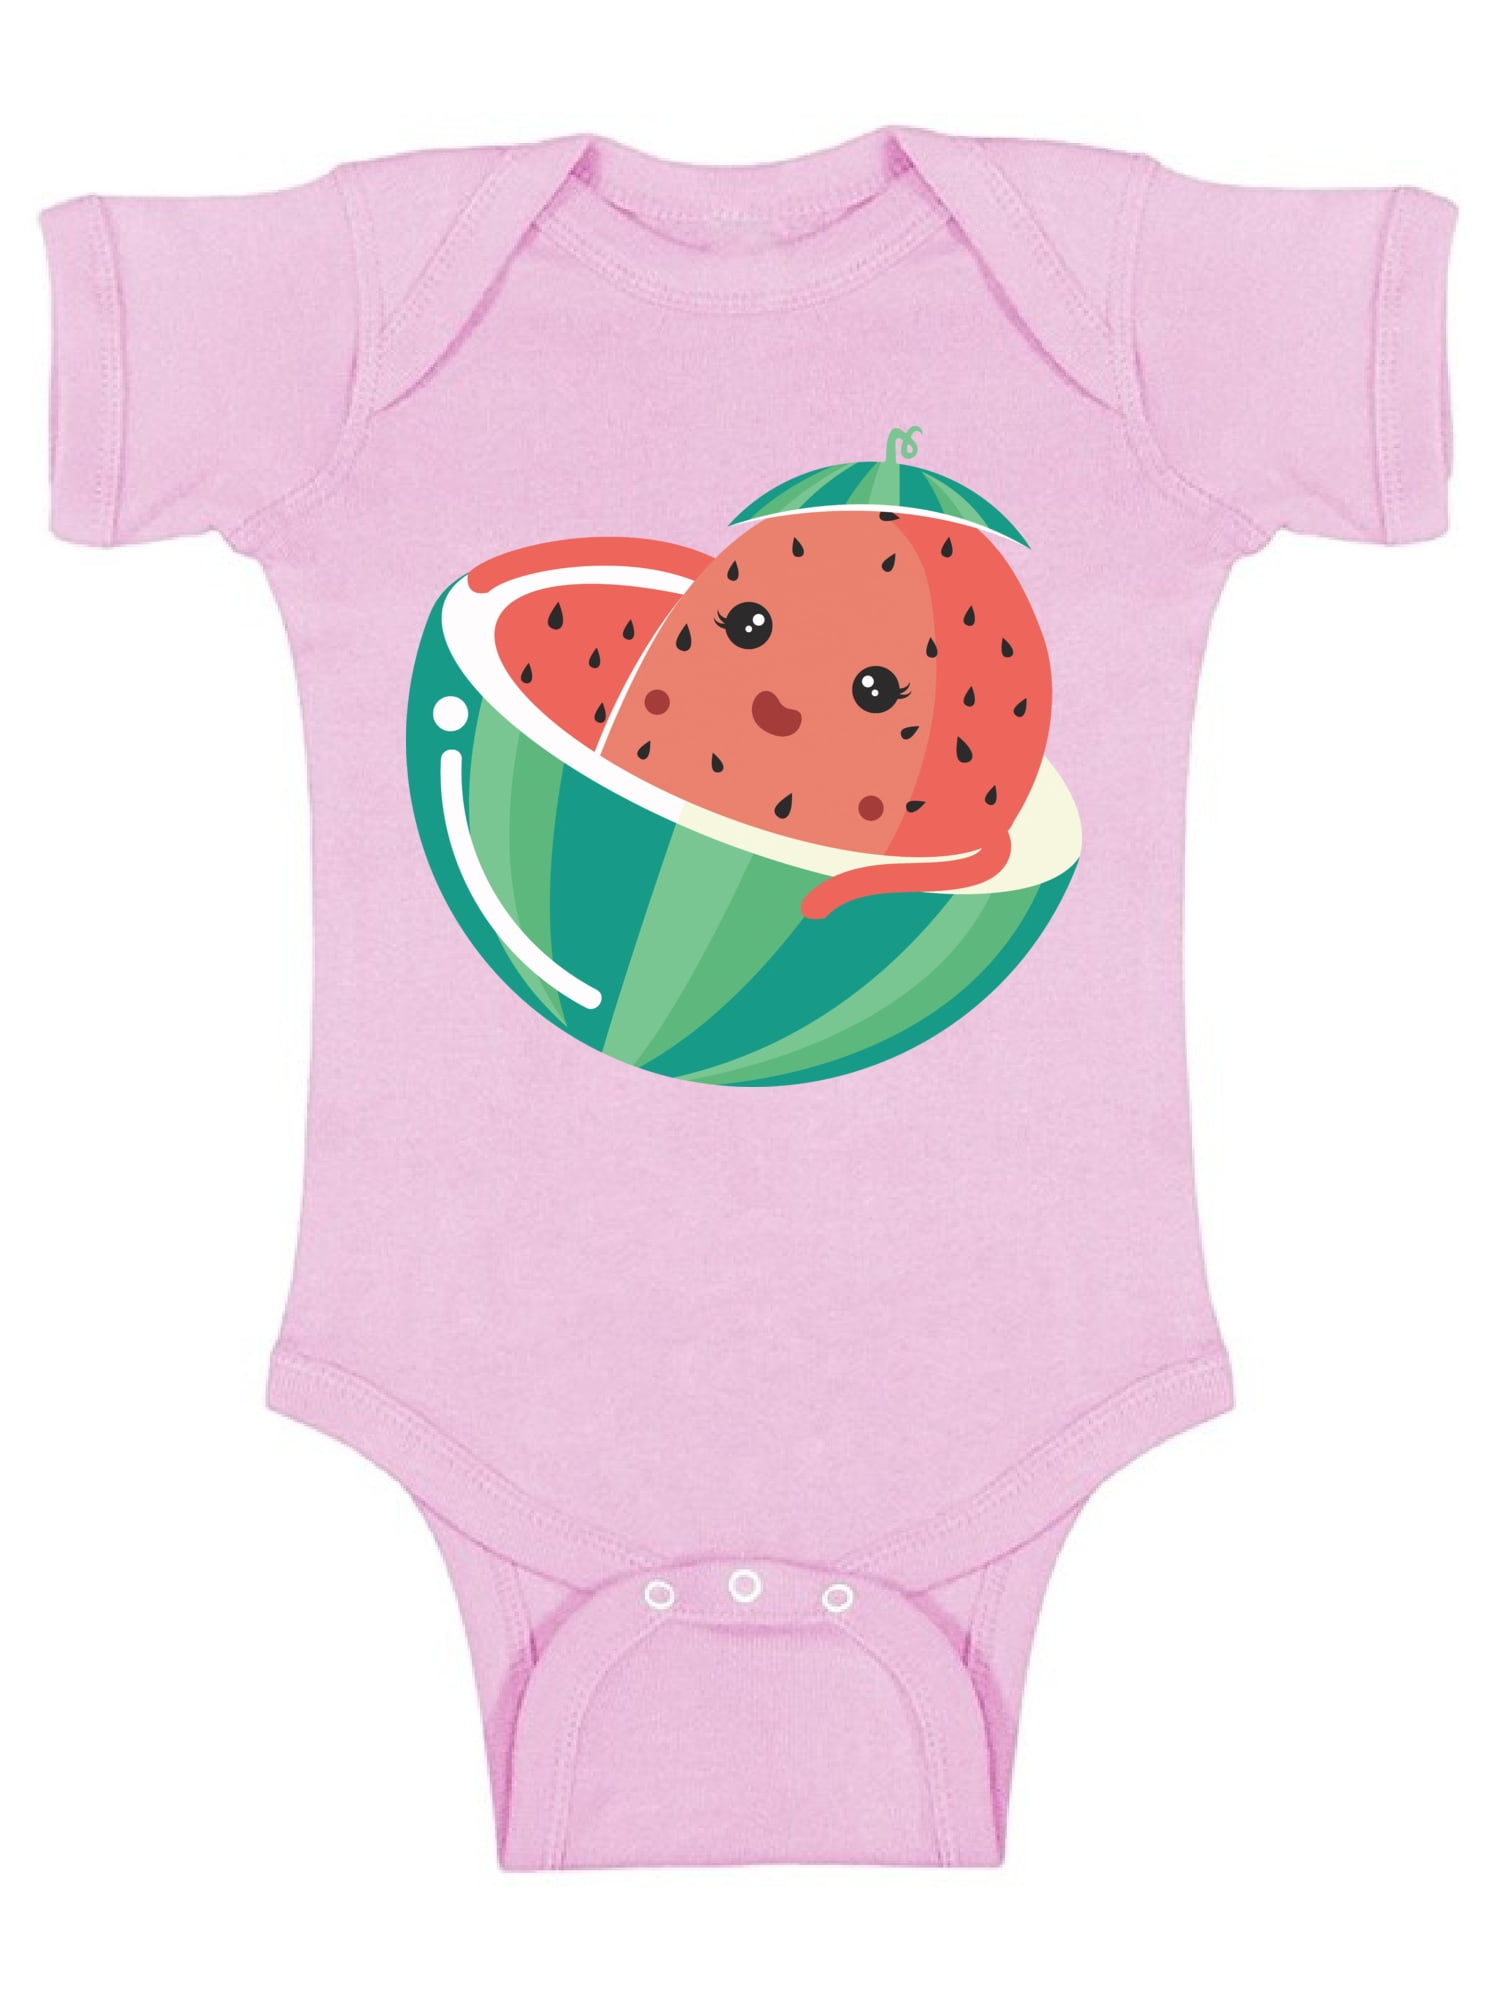 newborn watermelon outfit